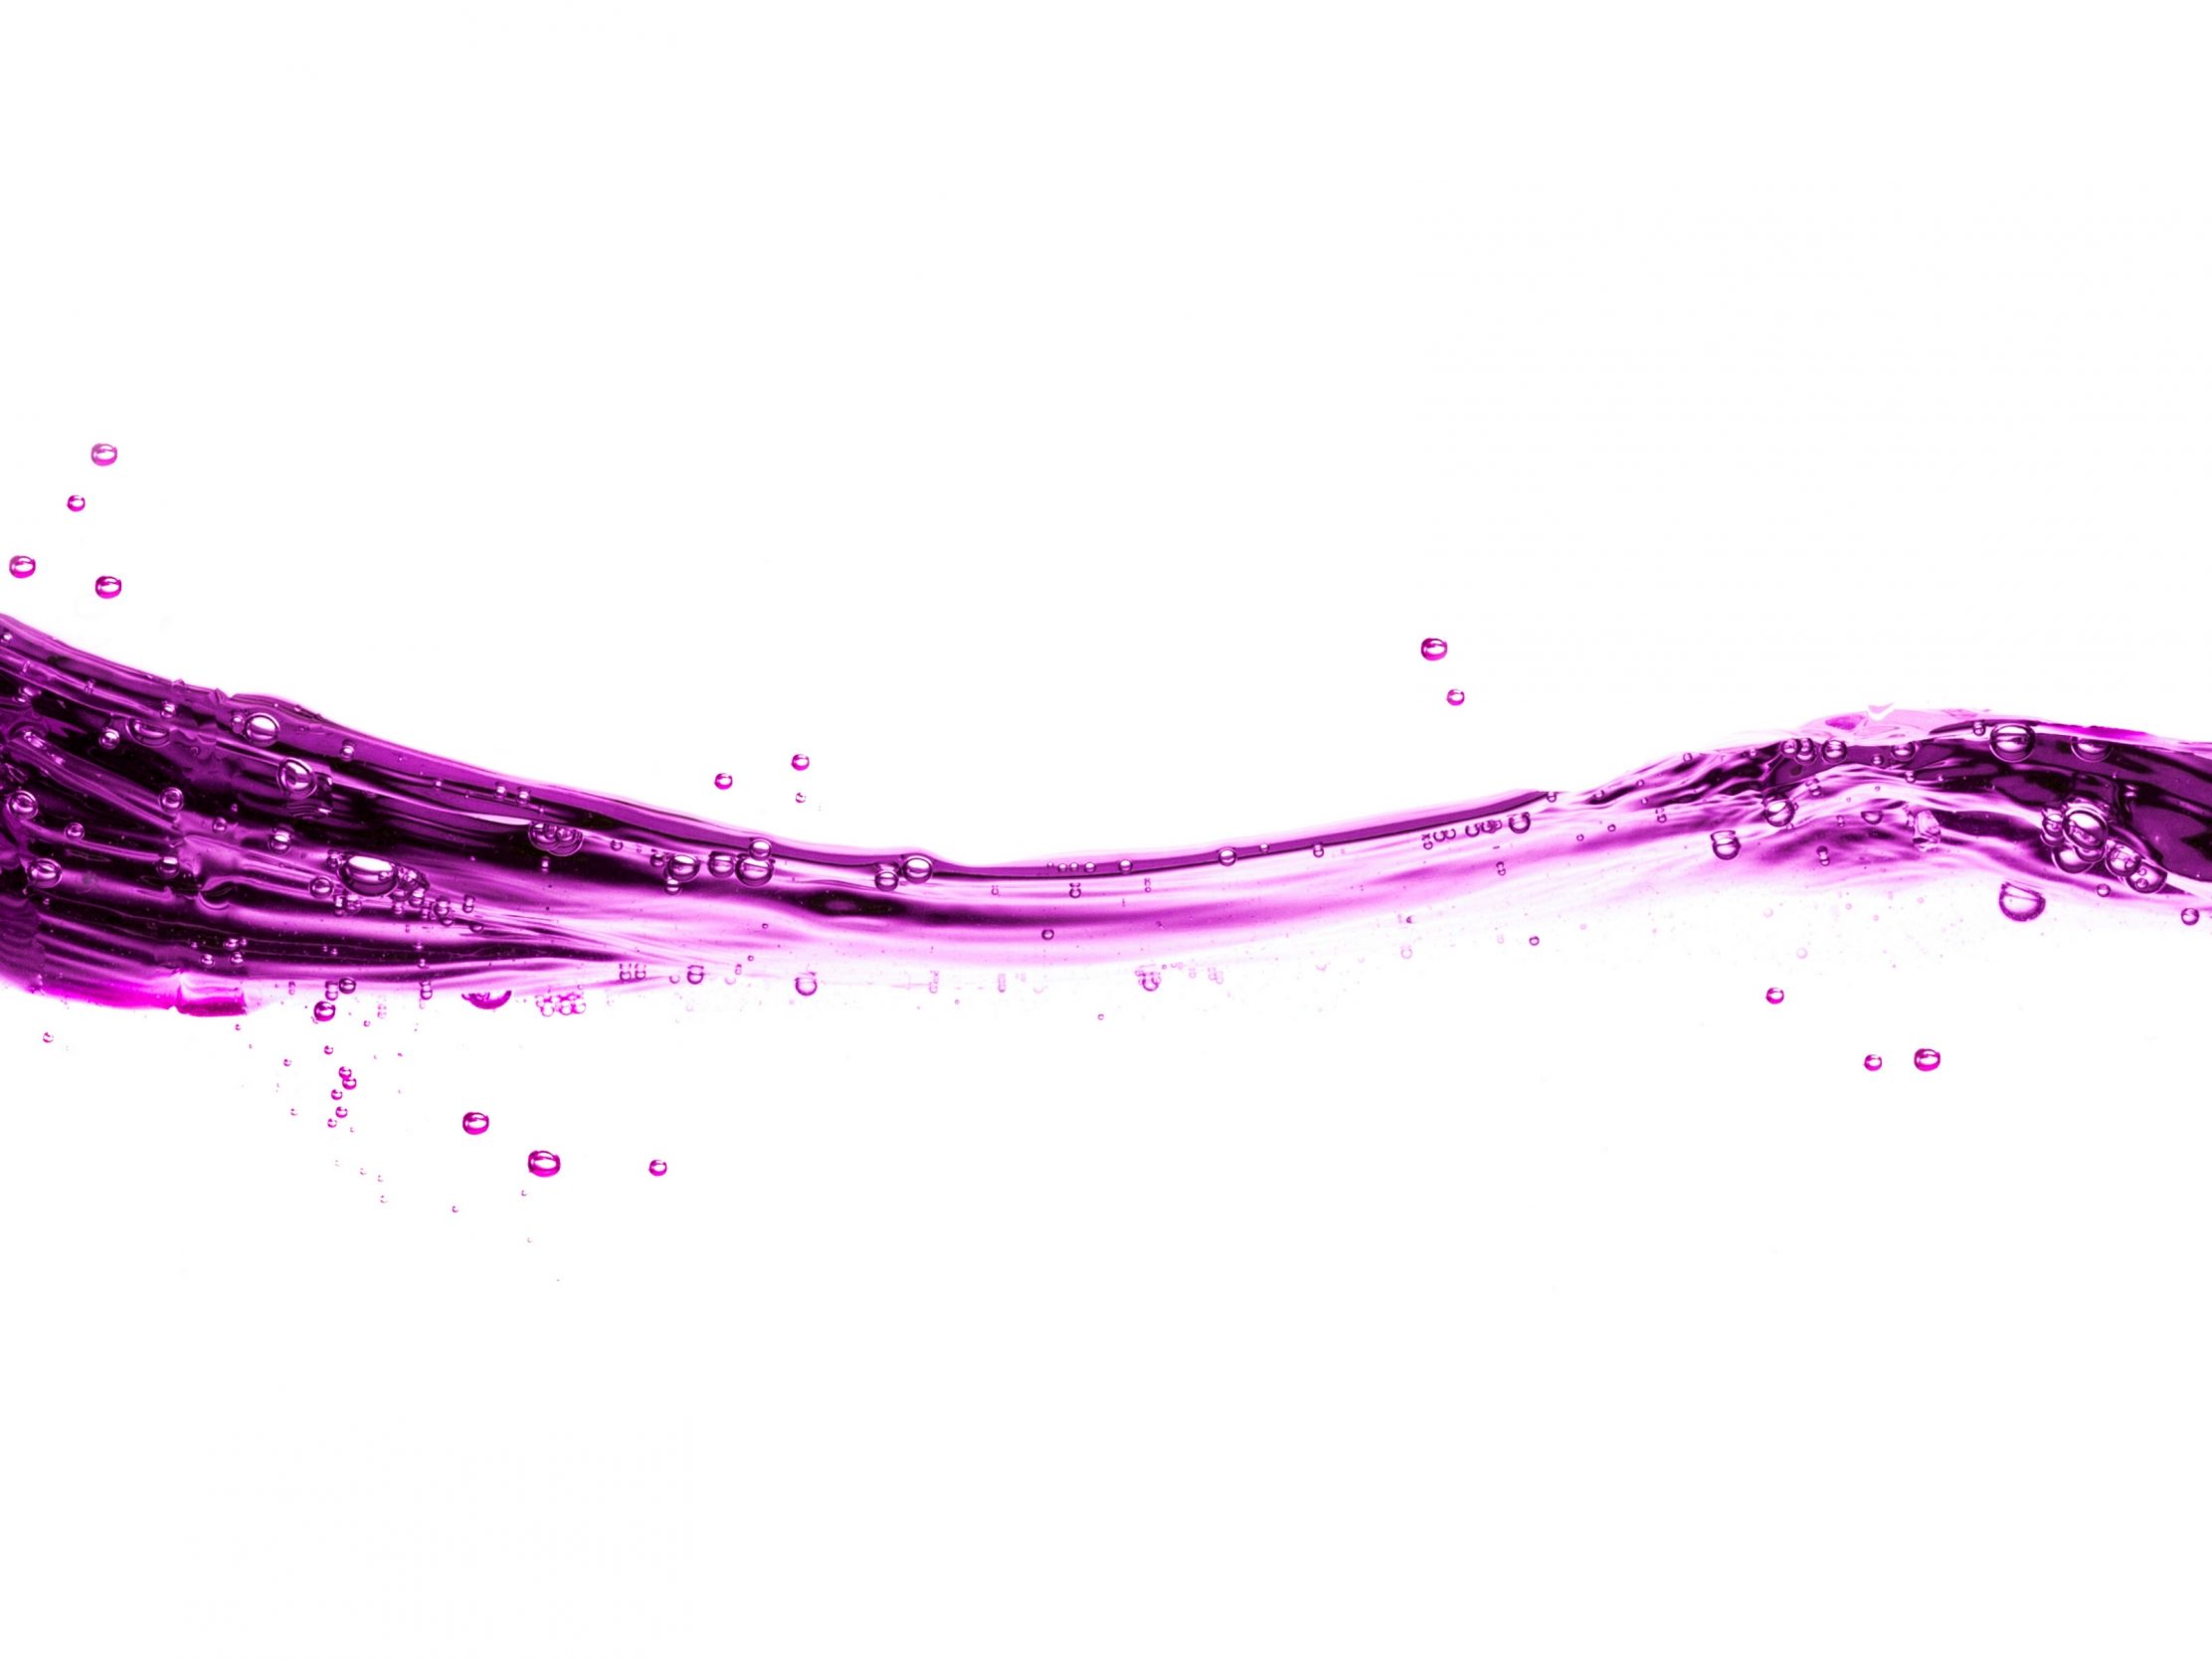 2224x1668 iPad Pro wallpapers Purple Water Splash White Background iPad Wallpaper 2224x1668 pixels resolution